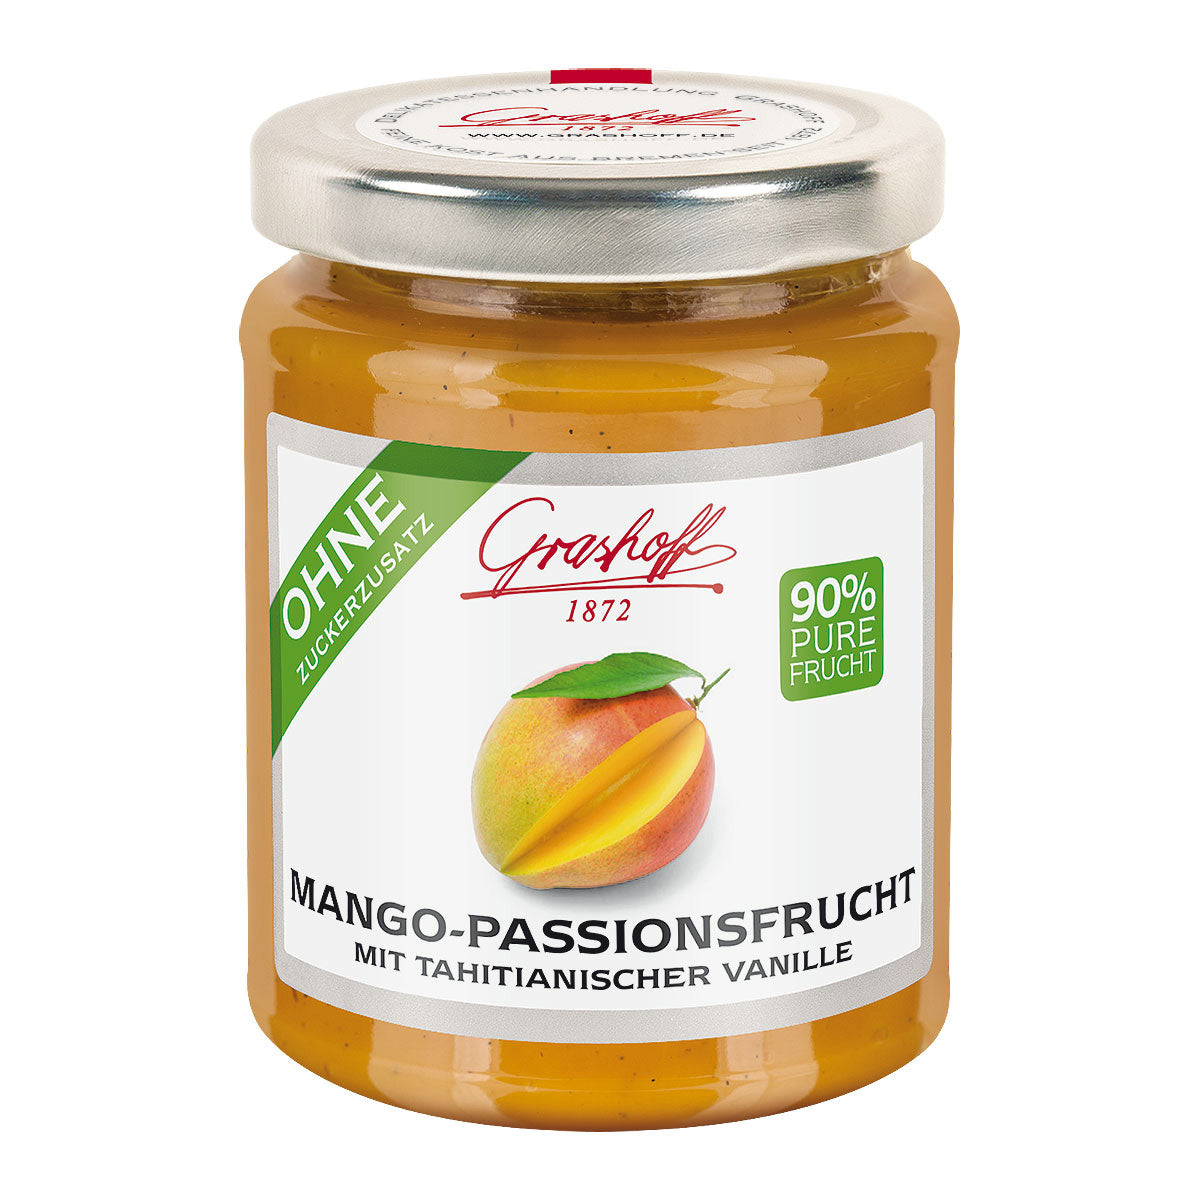 90% Frucht - Mango-Passionsfrucht